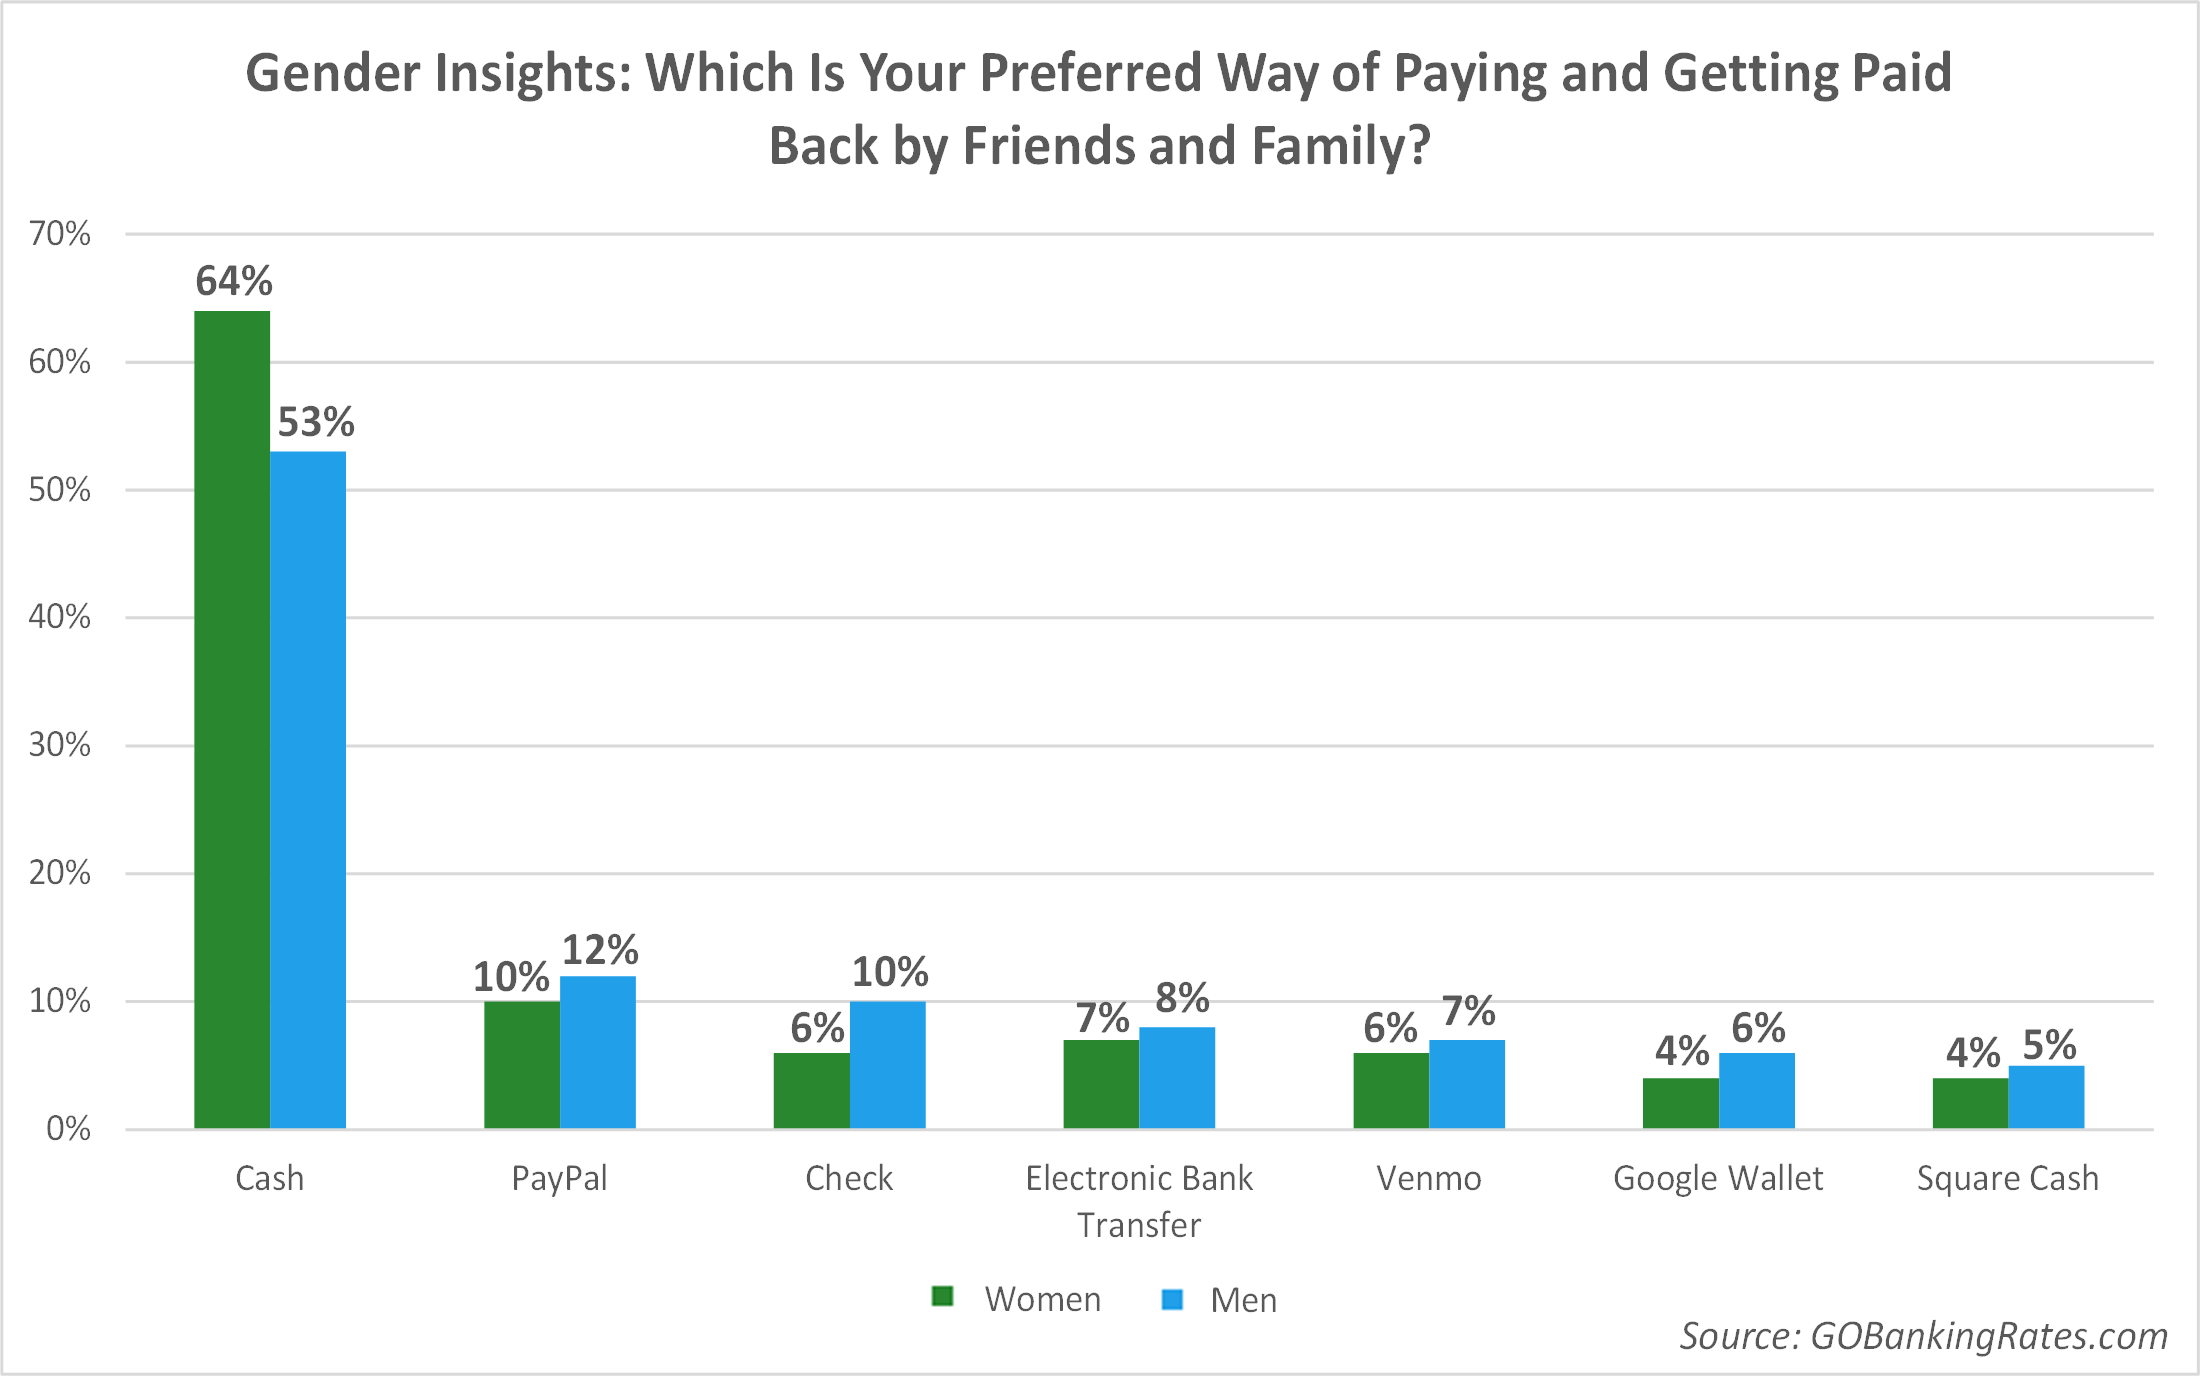 Gender Insights: Women Prefer Cash, Men Prefer Checks and P2P Apps